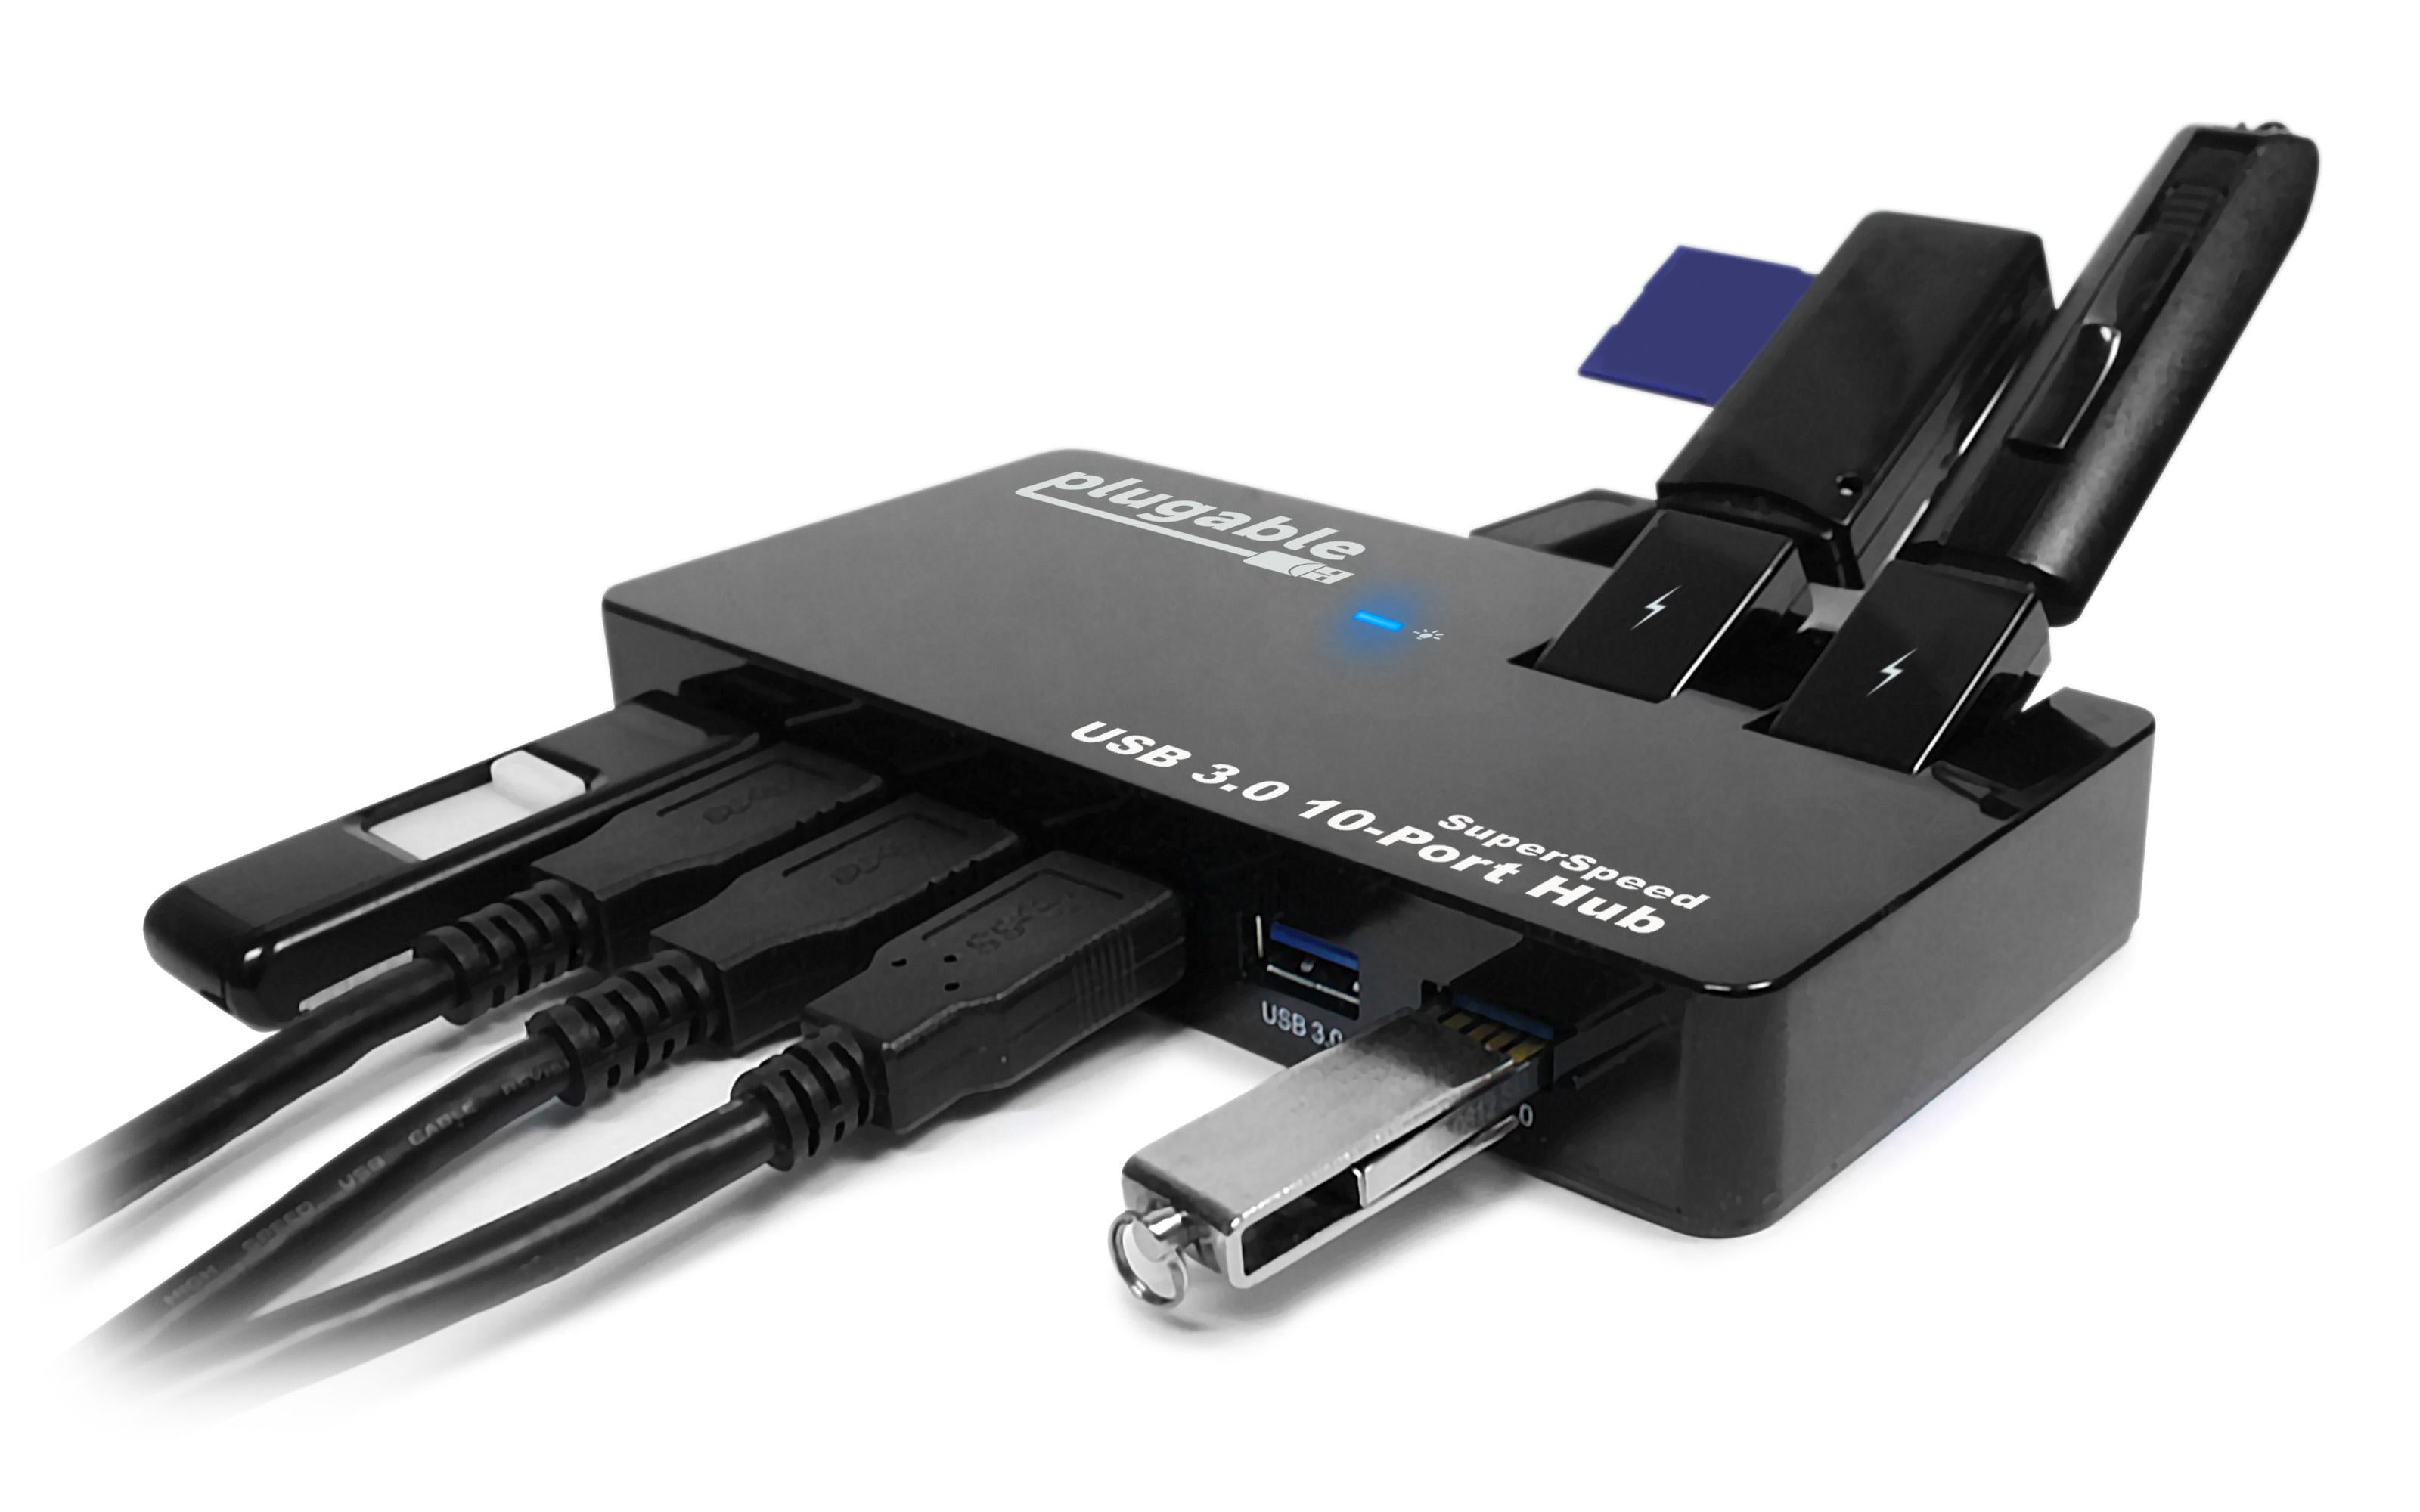 Plugable USB 3.0 10-Port Hub with 50W Power Adapter – Plugable Technologies